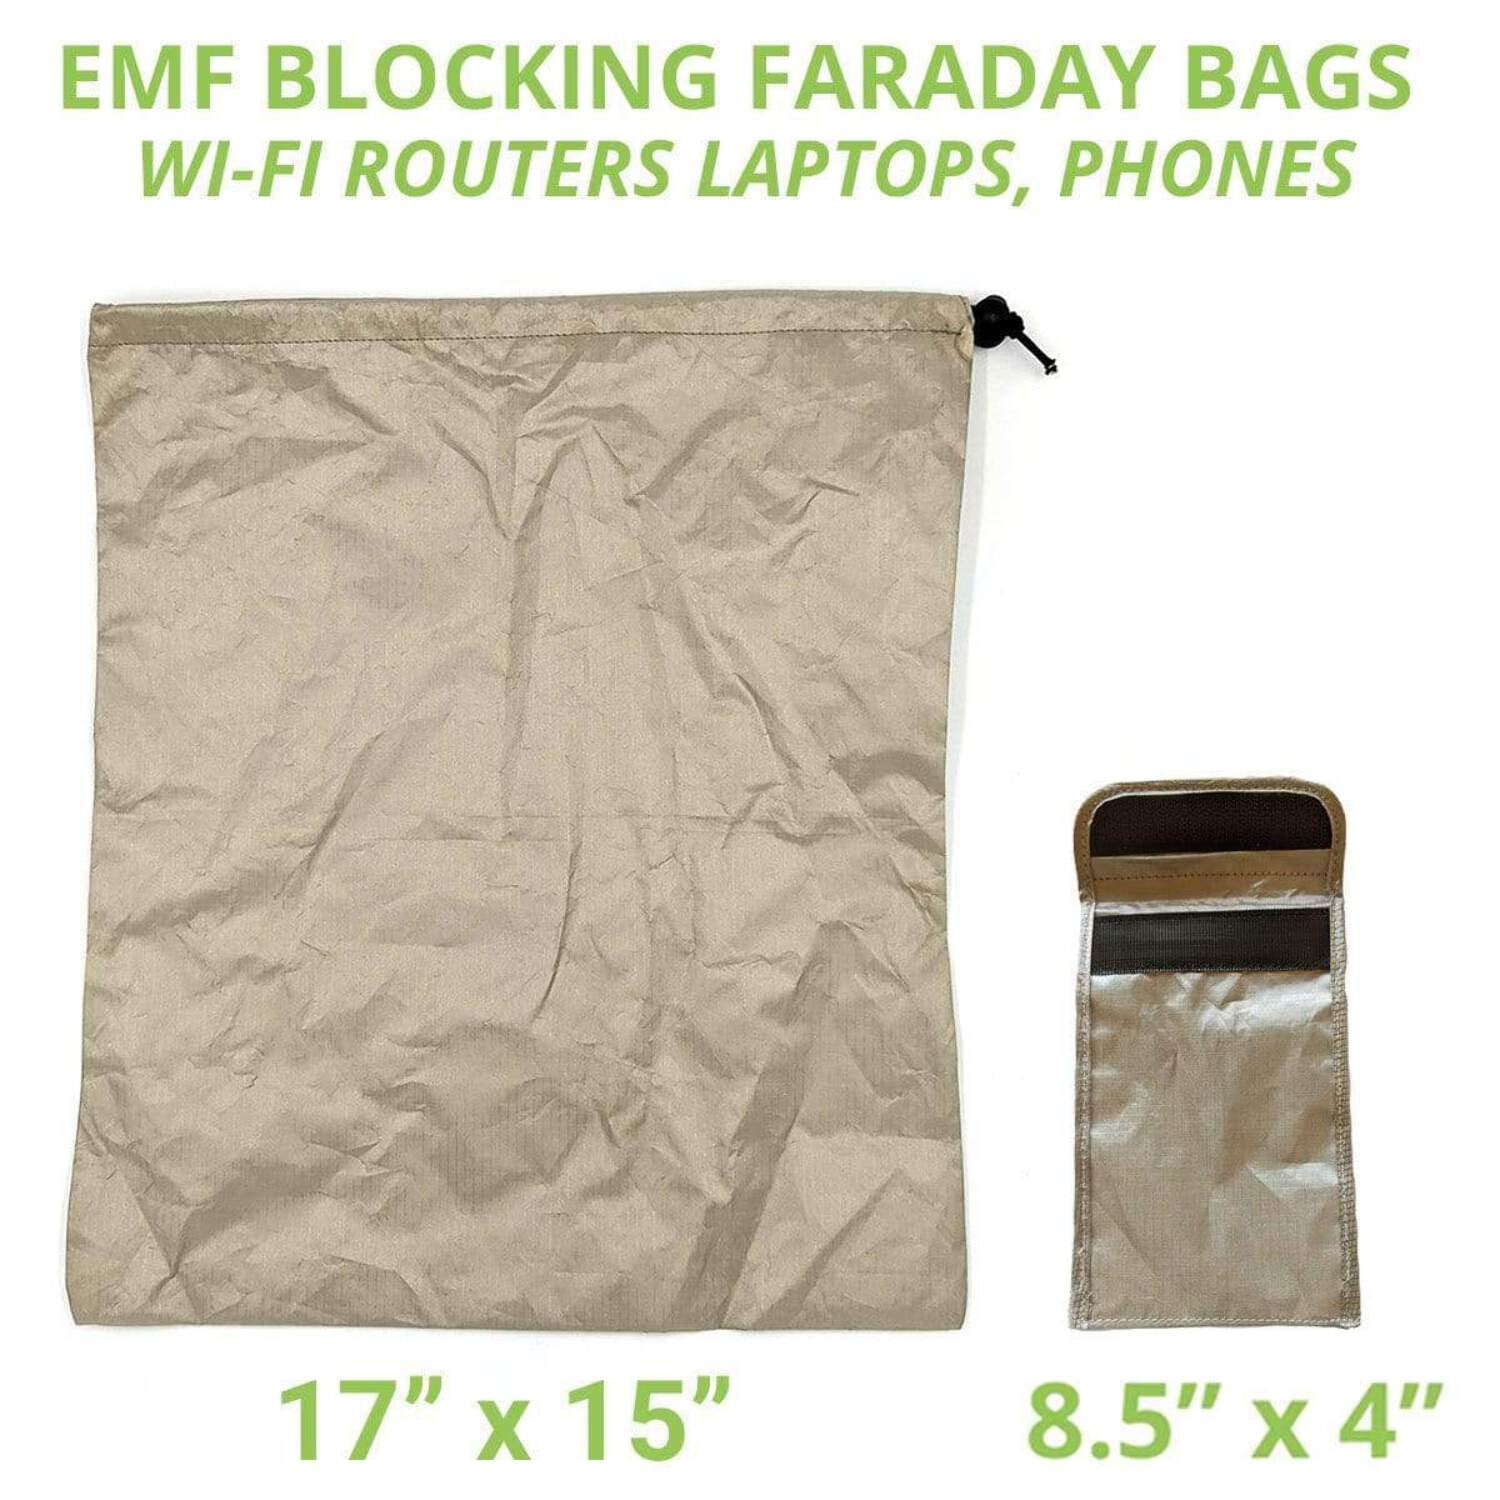 EMF/RFID Pocket